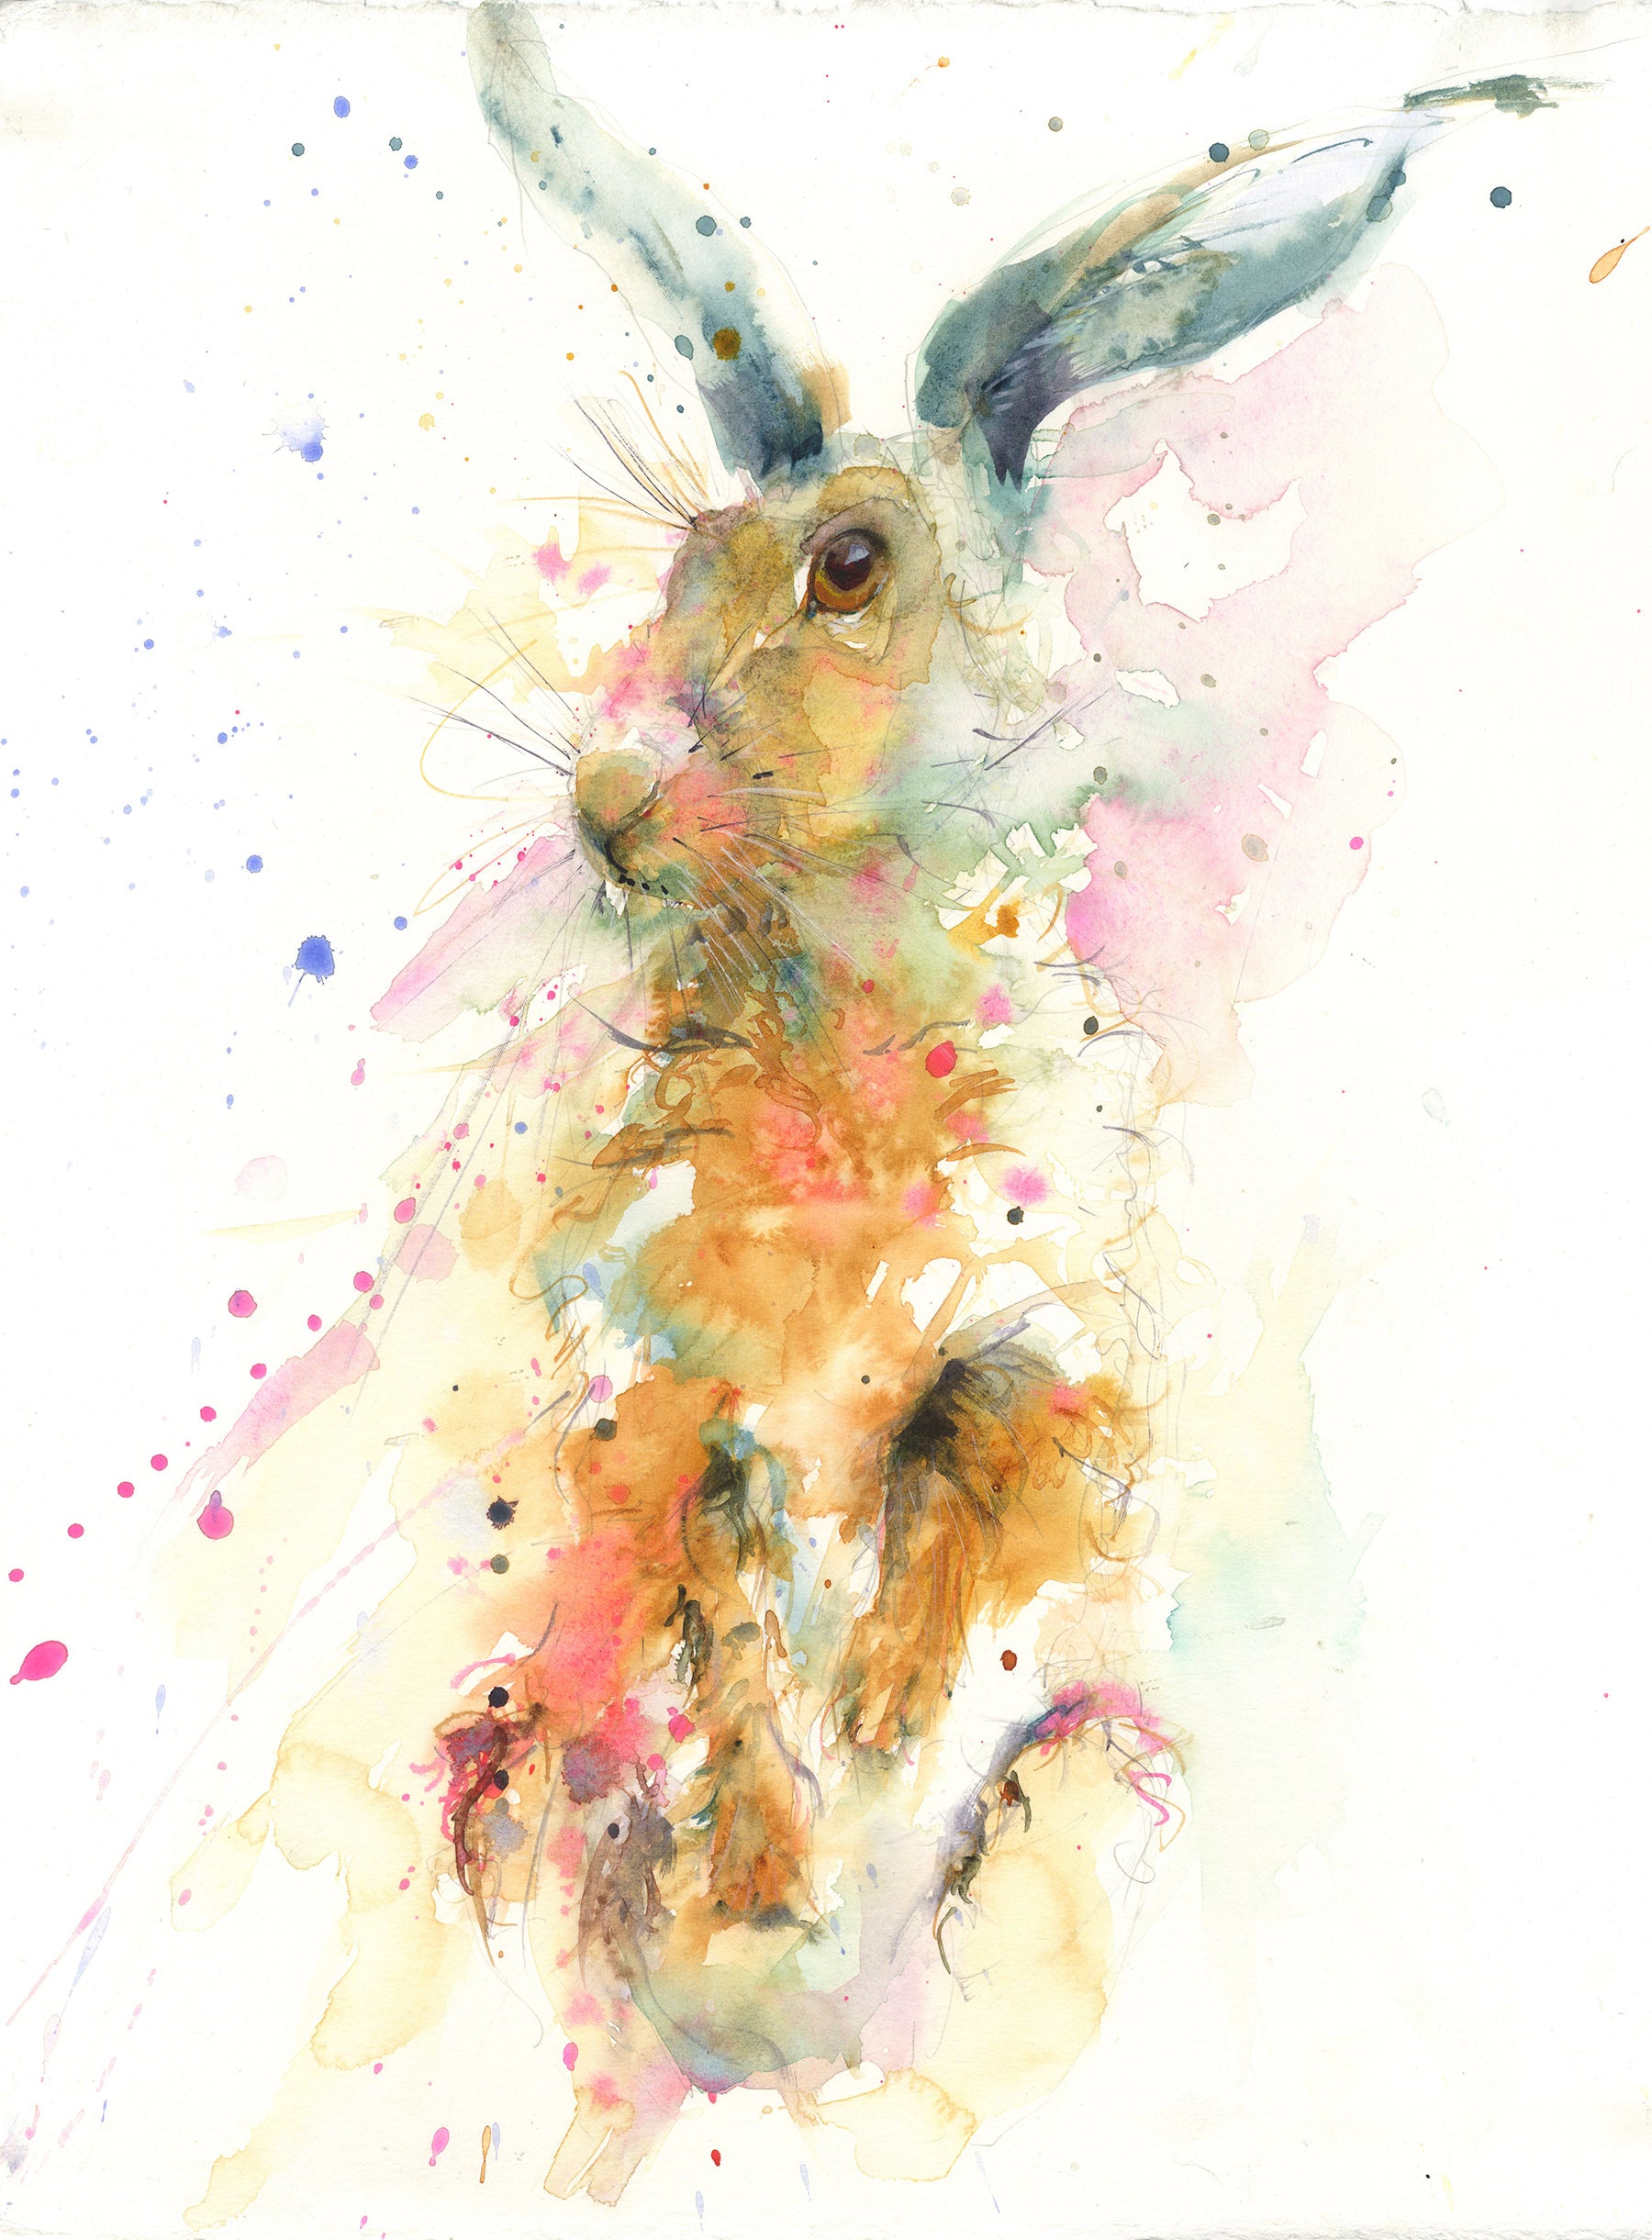 Limited edition hare print "Samuel" - Jen Buckley Art limited edition animal art prints